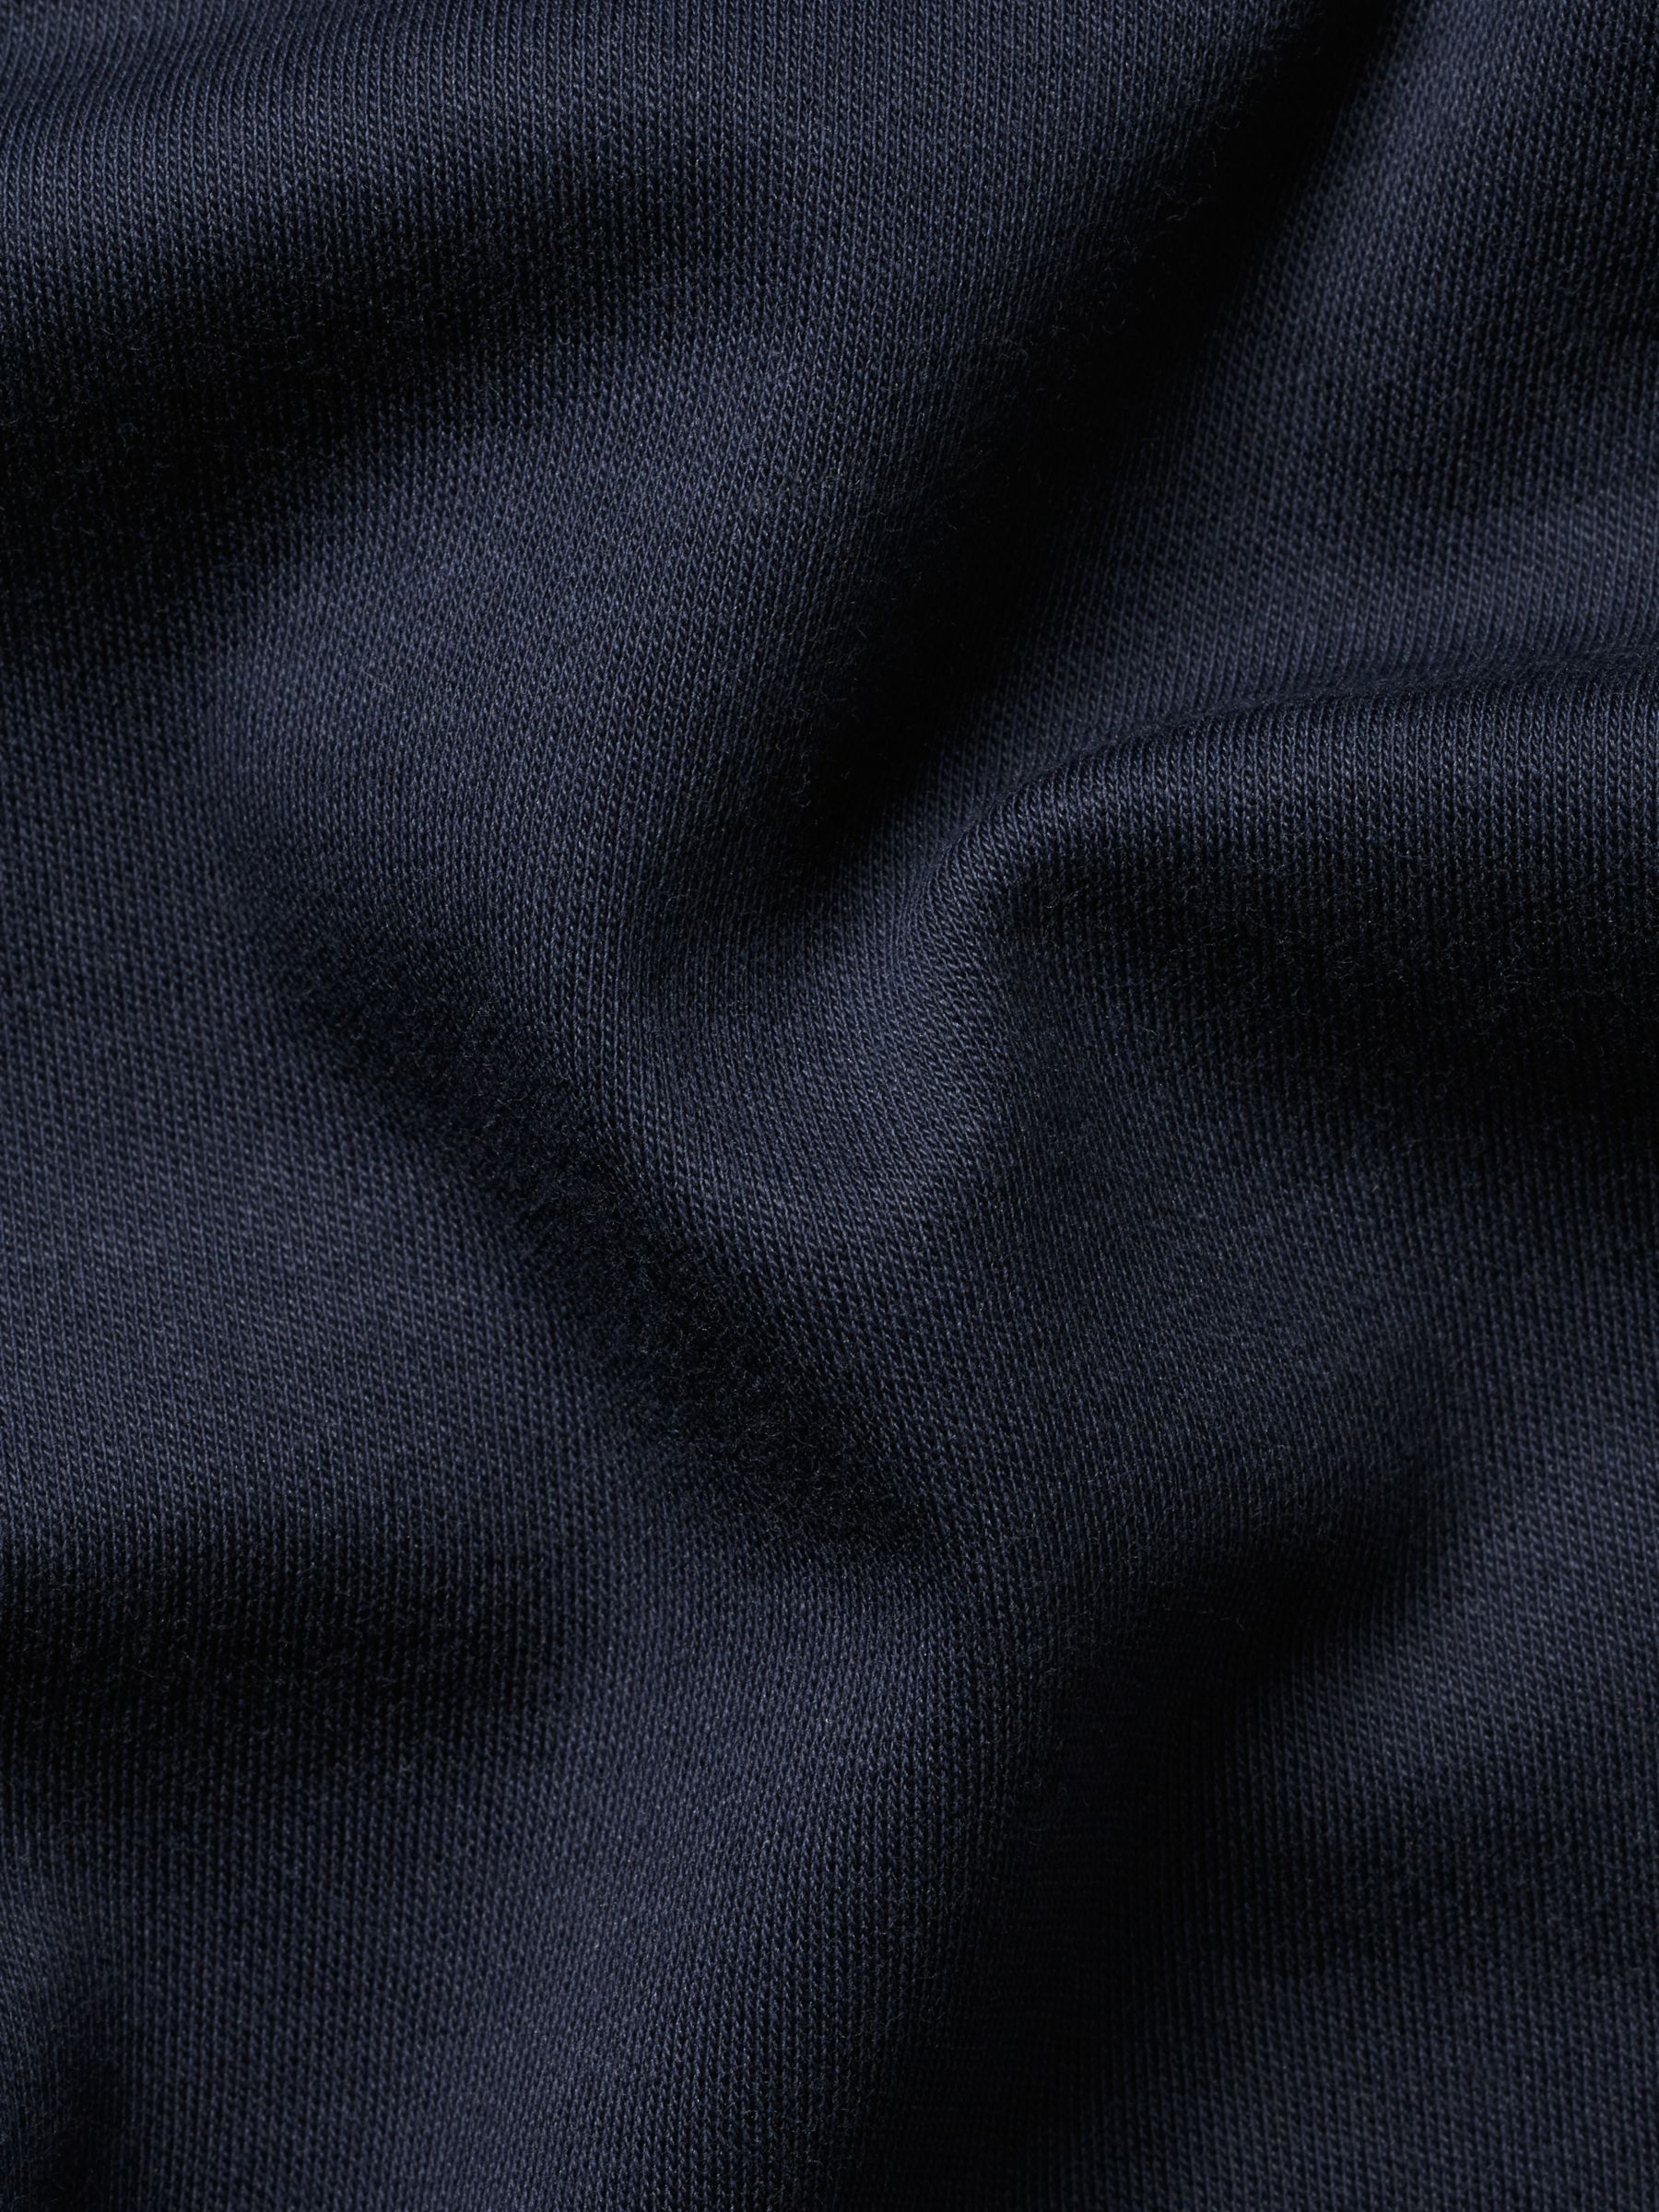 Charles Tyrwhitt Smart Jersey Short Sleeve Polo, Navy Blue, S